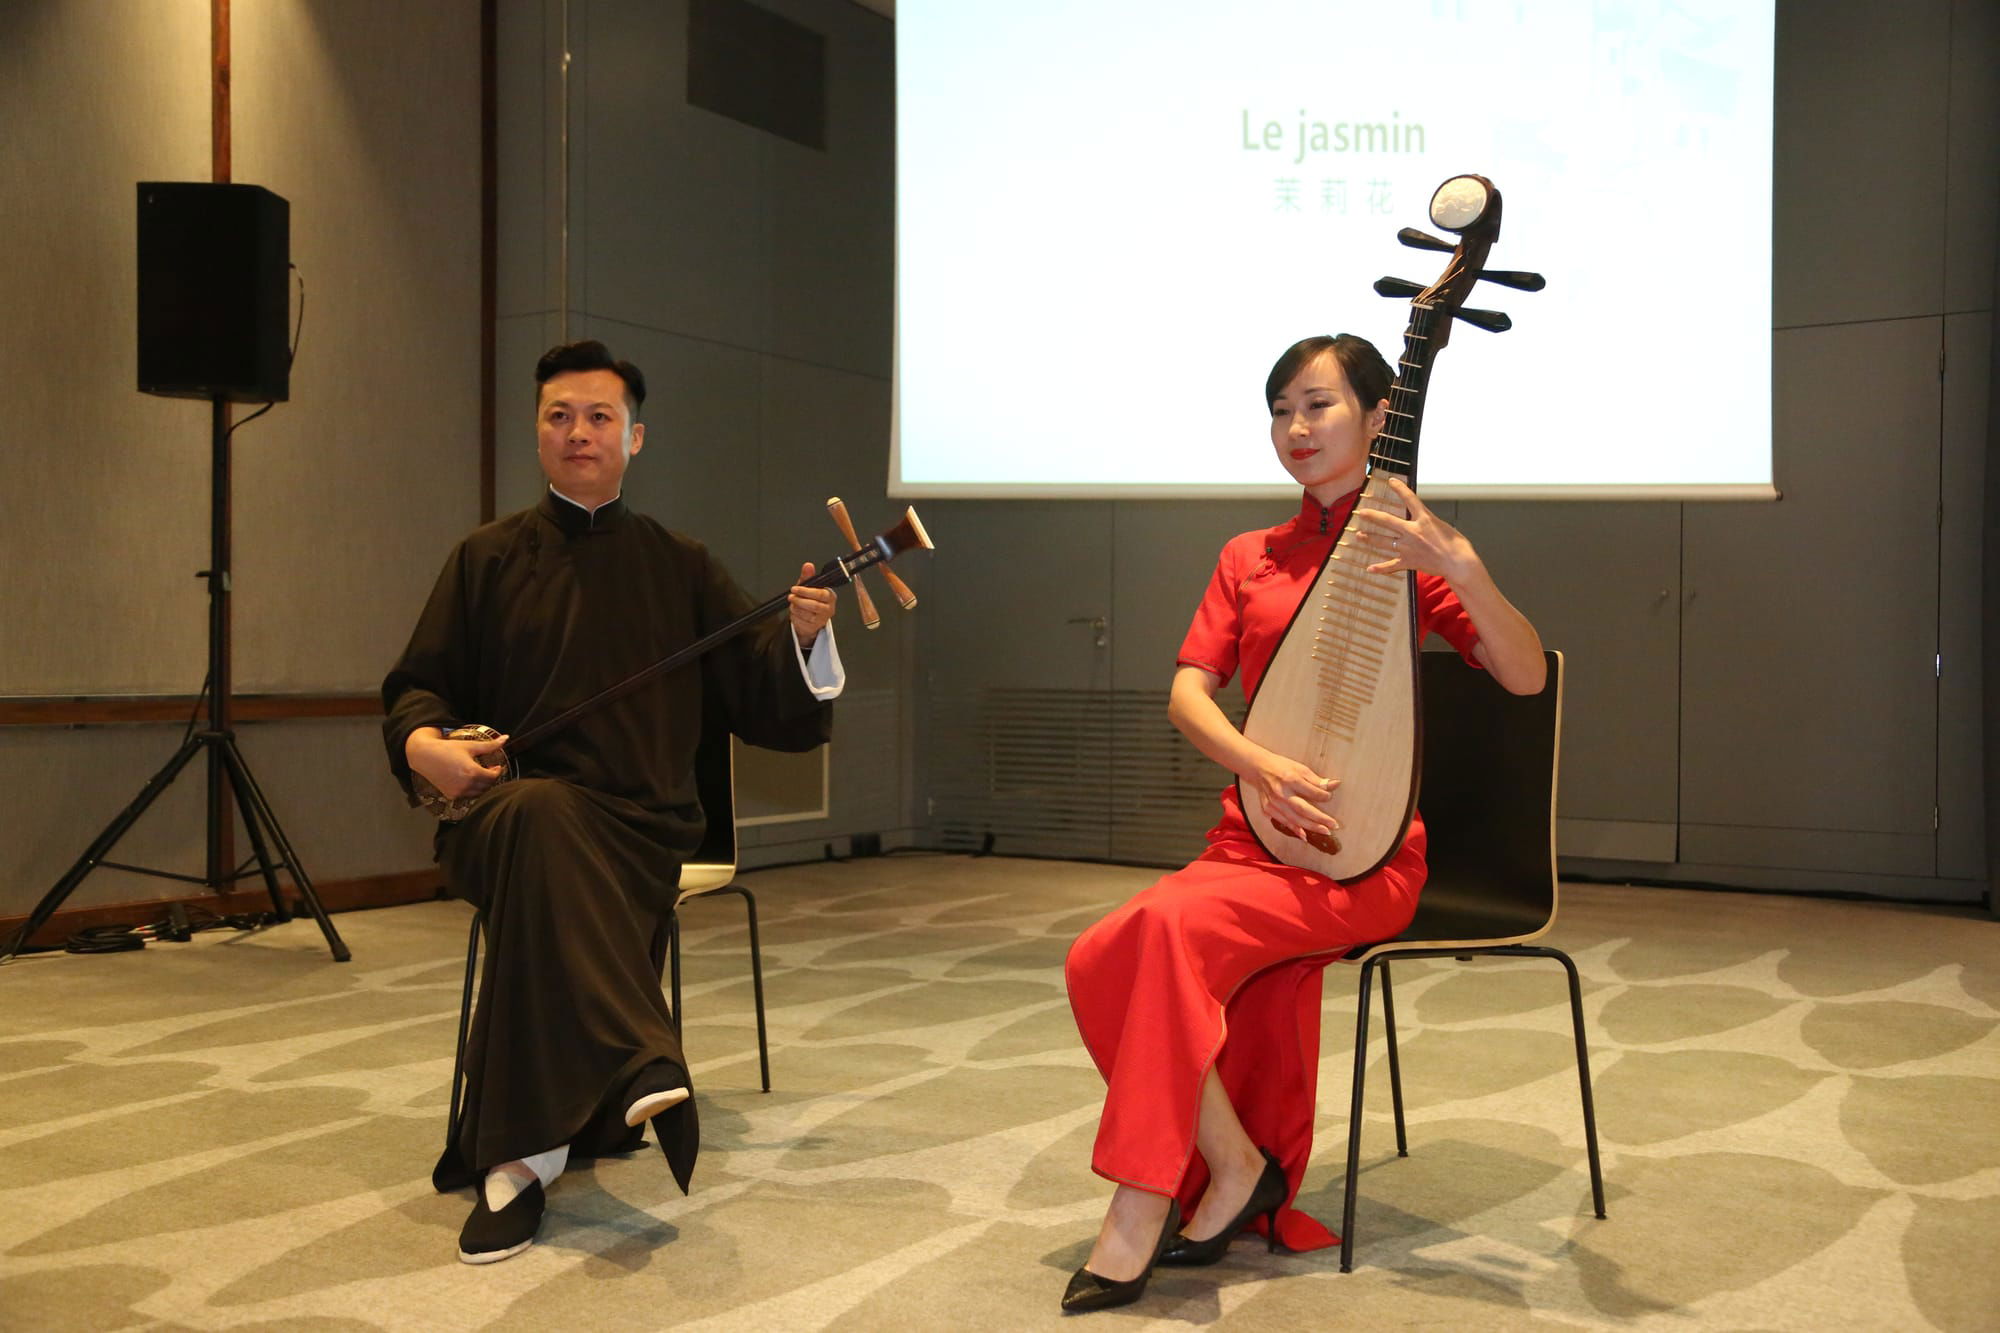 Démonstration de pípa, instrument traditionnel chinois